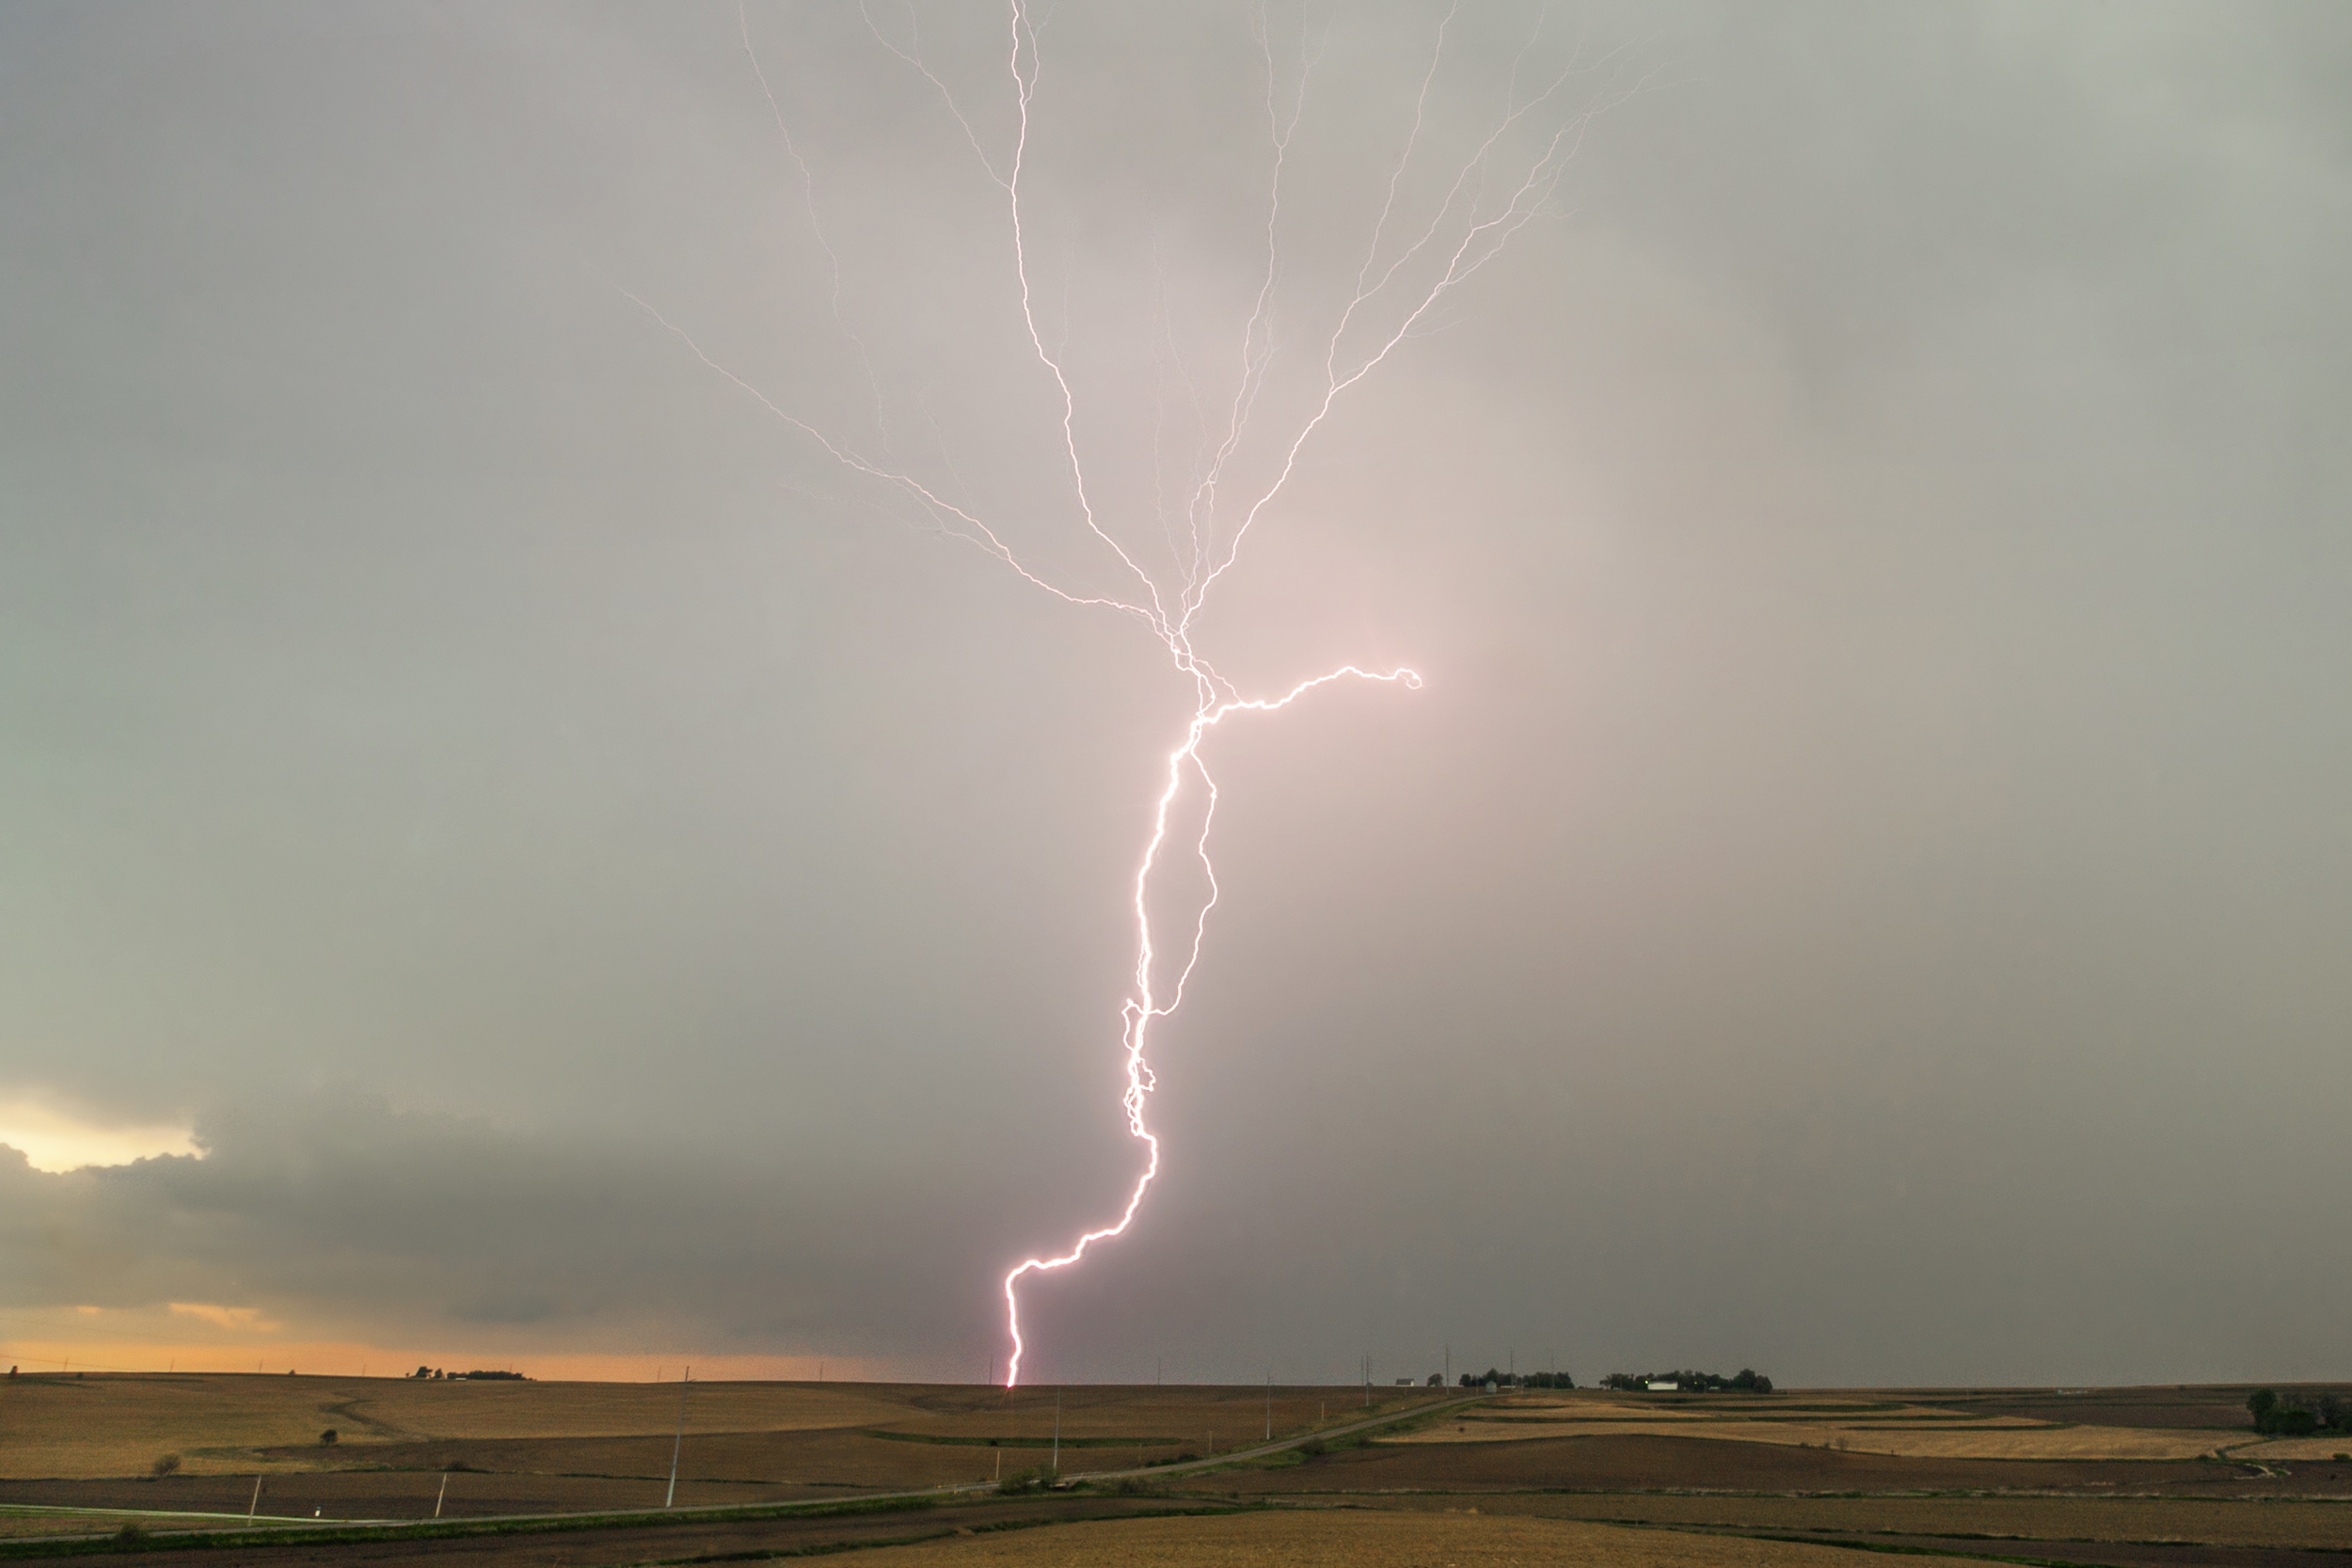  Massive +CG initiates its own upwards lightning in Blair, Nebraska on May 4, 2012 